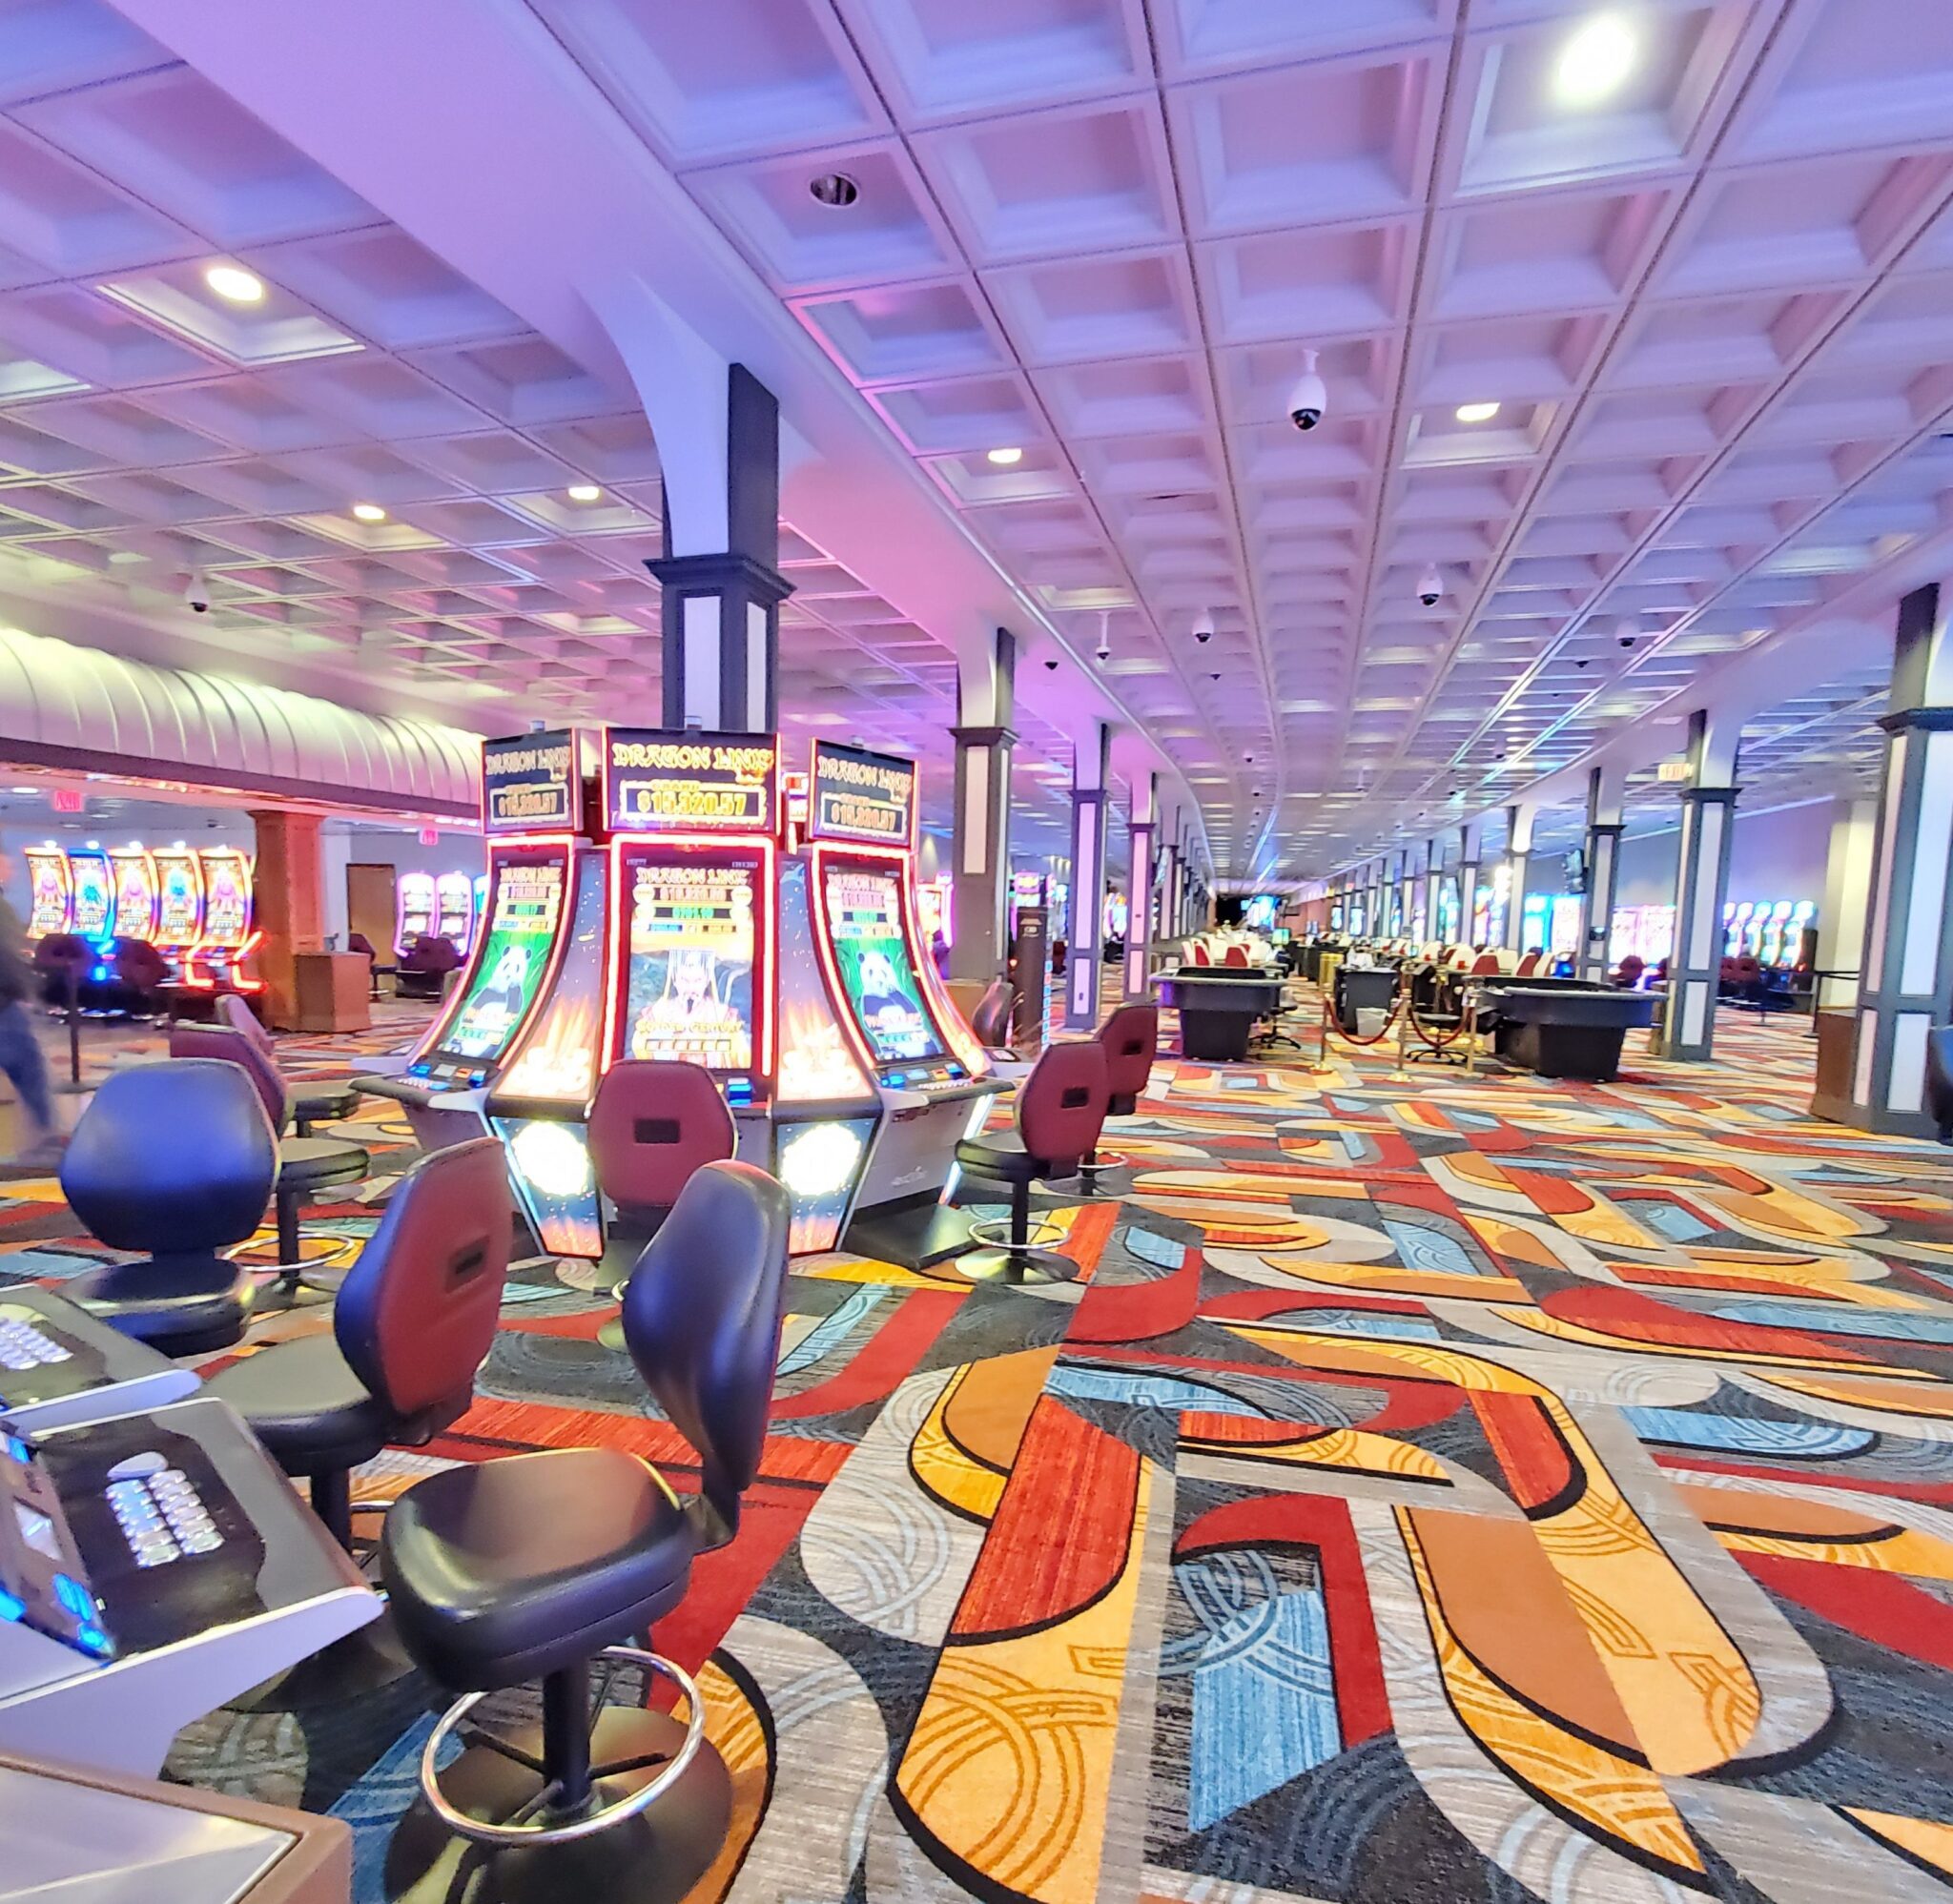 Delaware Park Casino & Racing to Undergo $10 Million Renovation